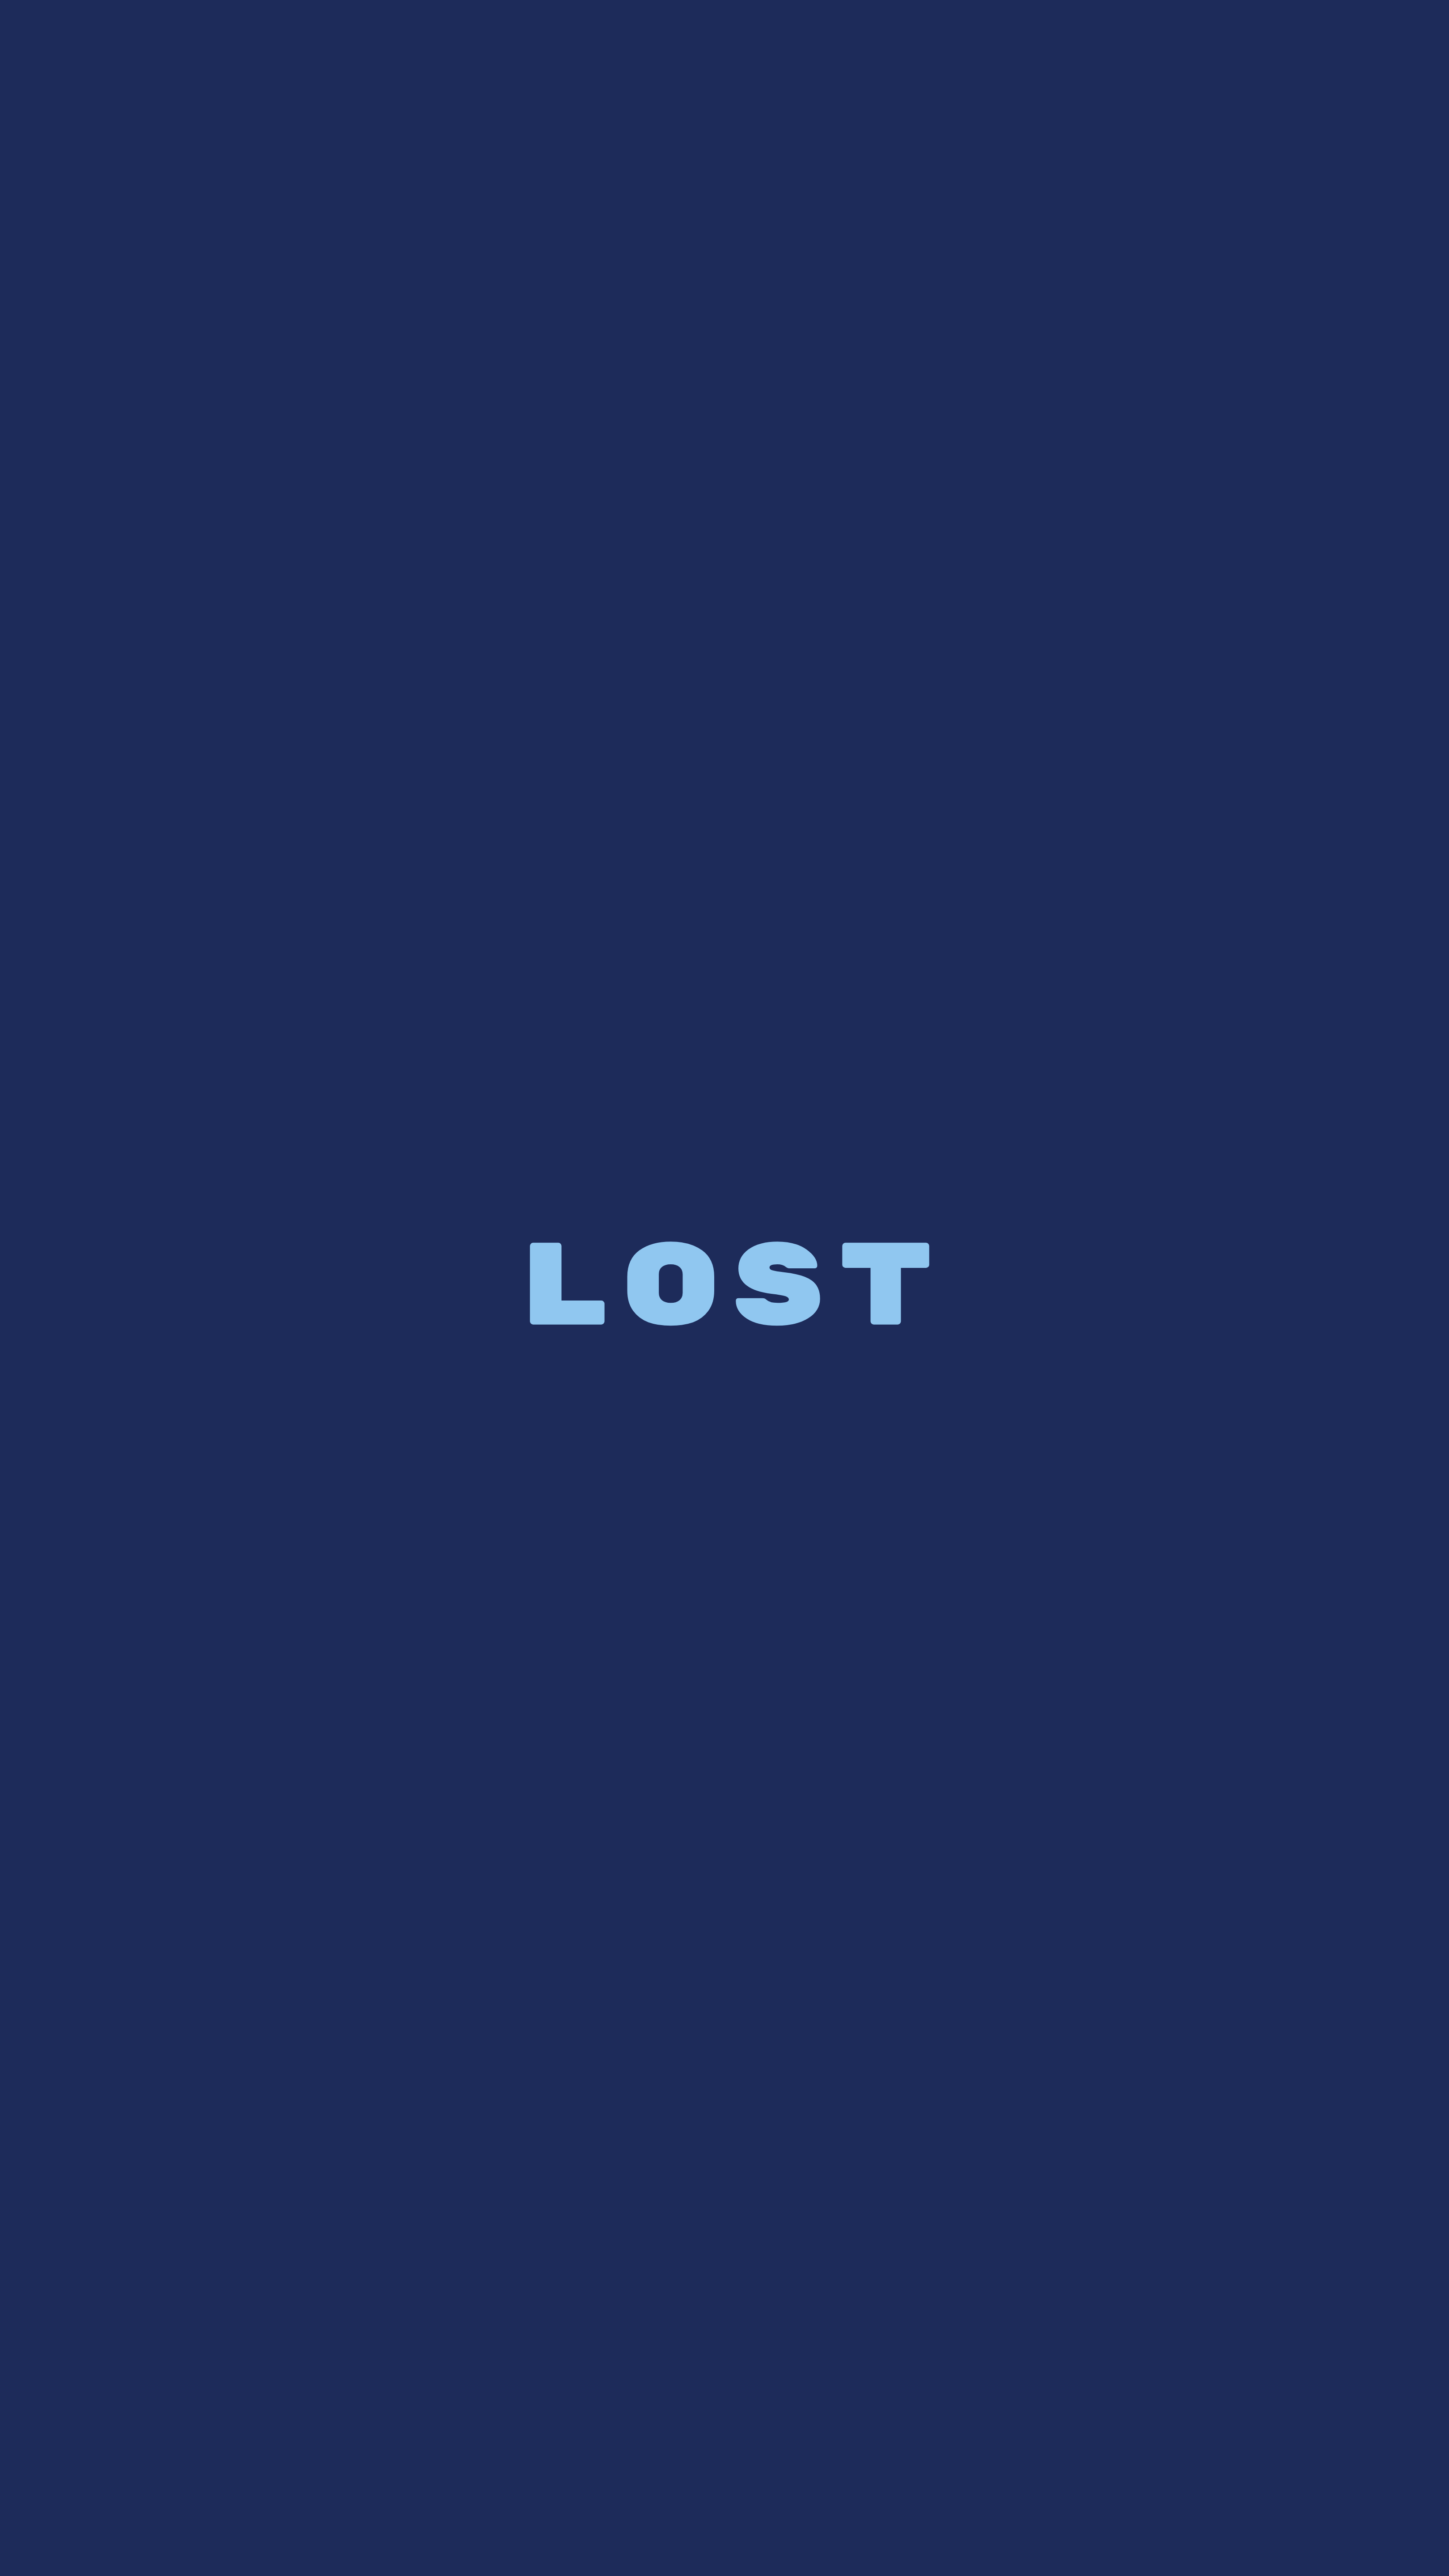 lost, words, minimalism, blue, inscription, word